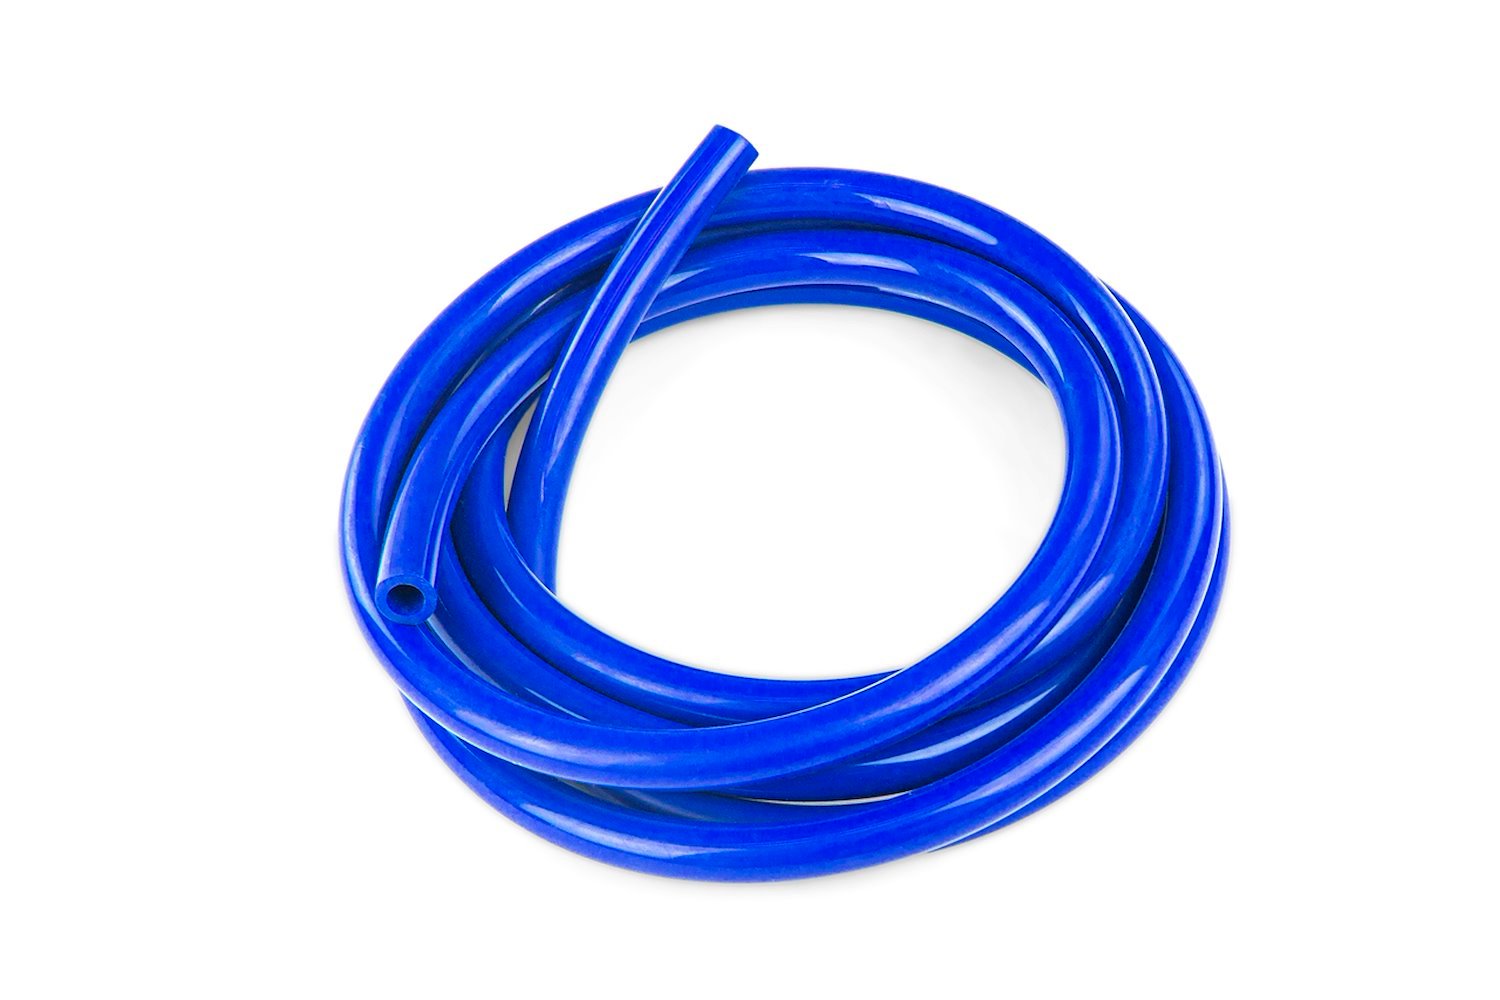 HTSVH10-BLUEx5 High-Temperature Silicone Vacuum Hose Tubing, 10 mm ID, 5 ft. Roll, Blue